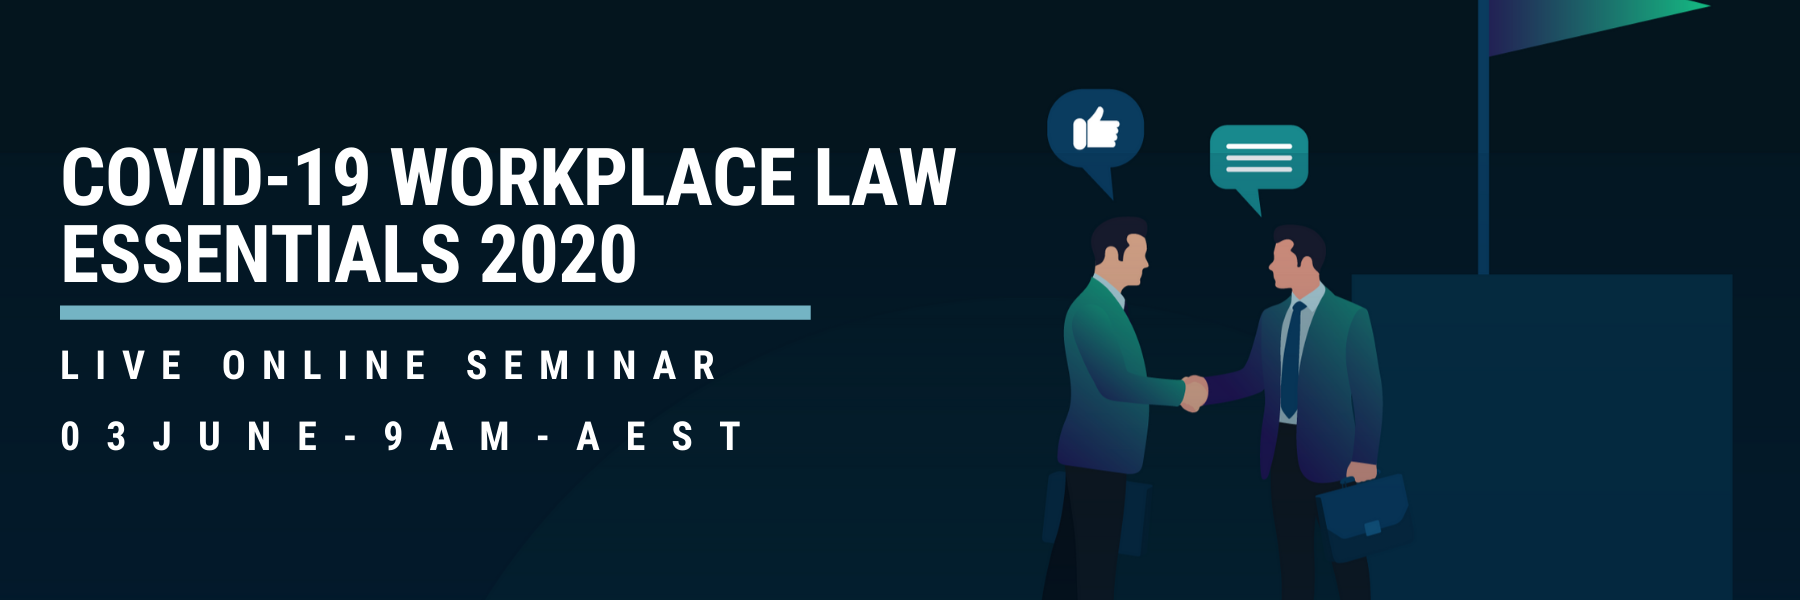 Workplace Law Essentials